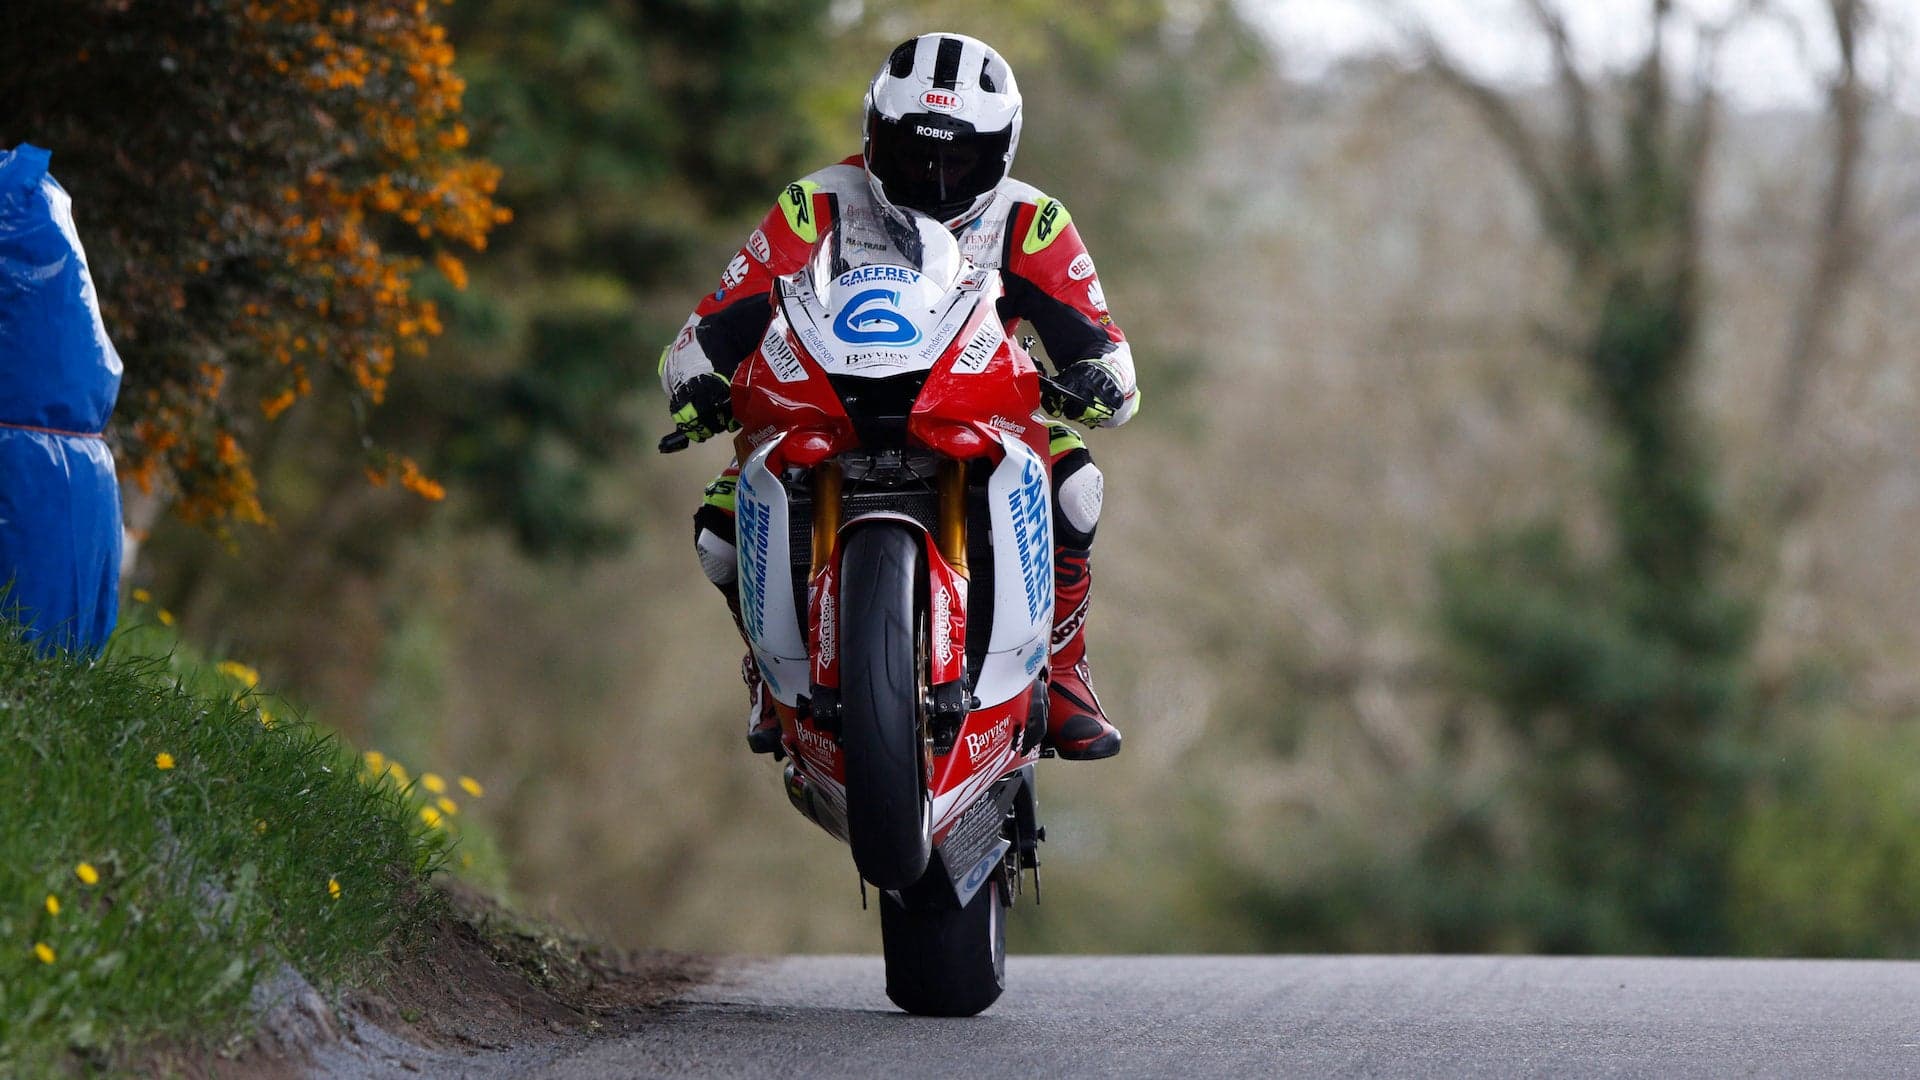 Isle of Man TT Motorcycle Rider William Dunlop Killed in Racing Crash